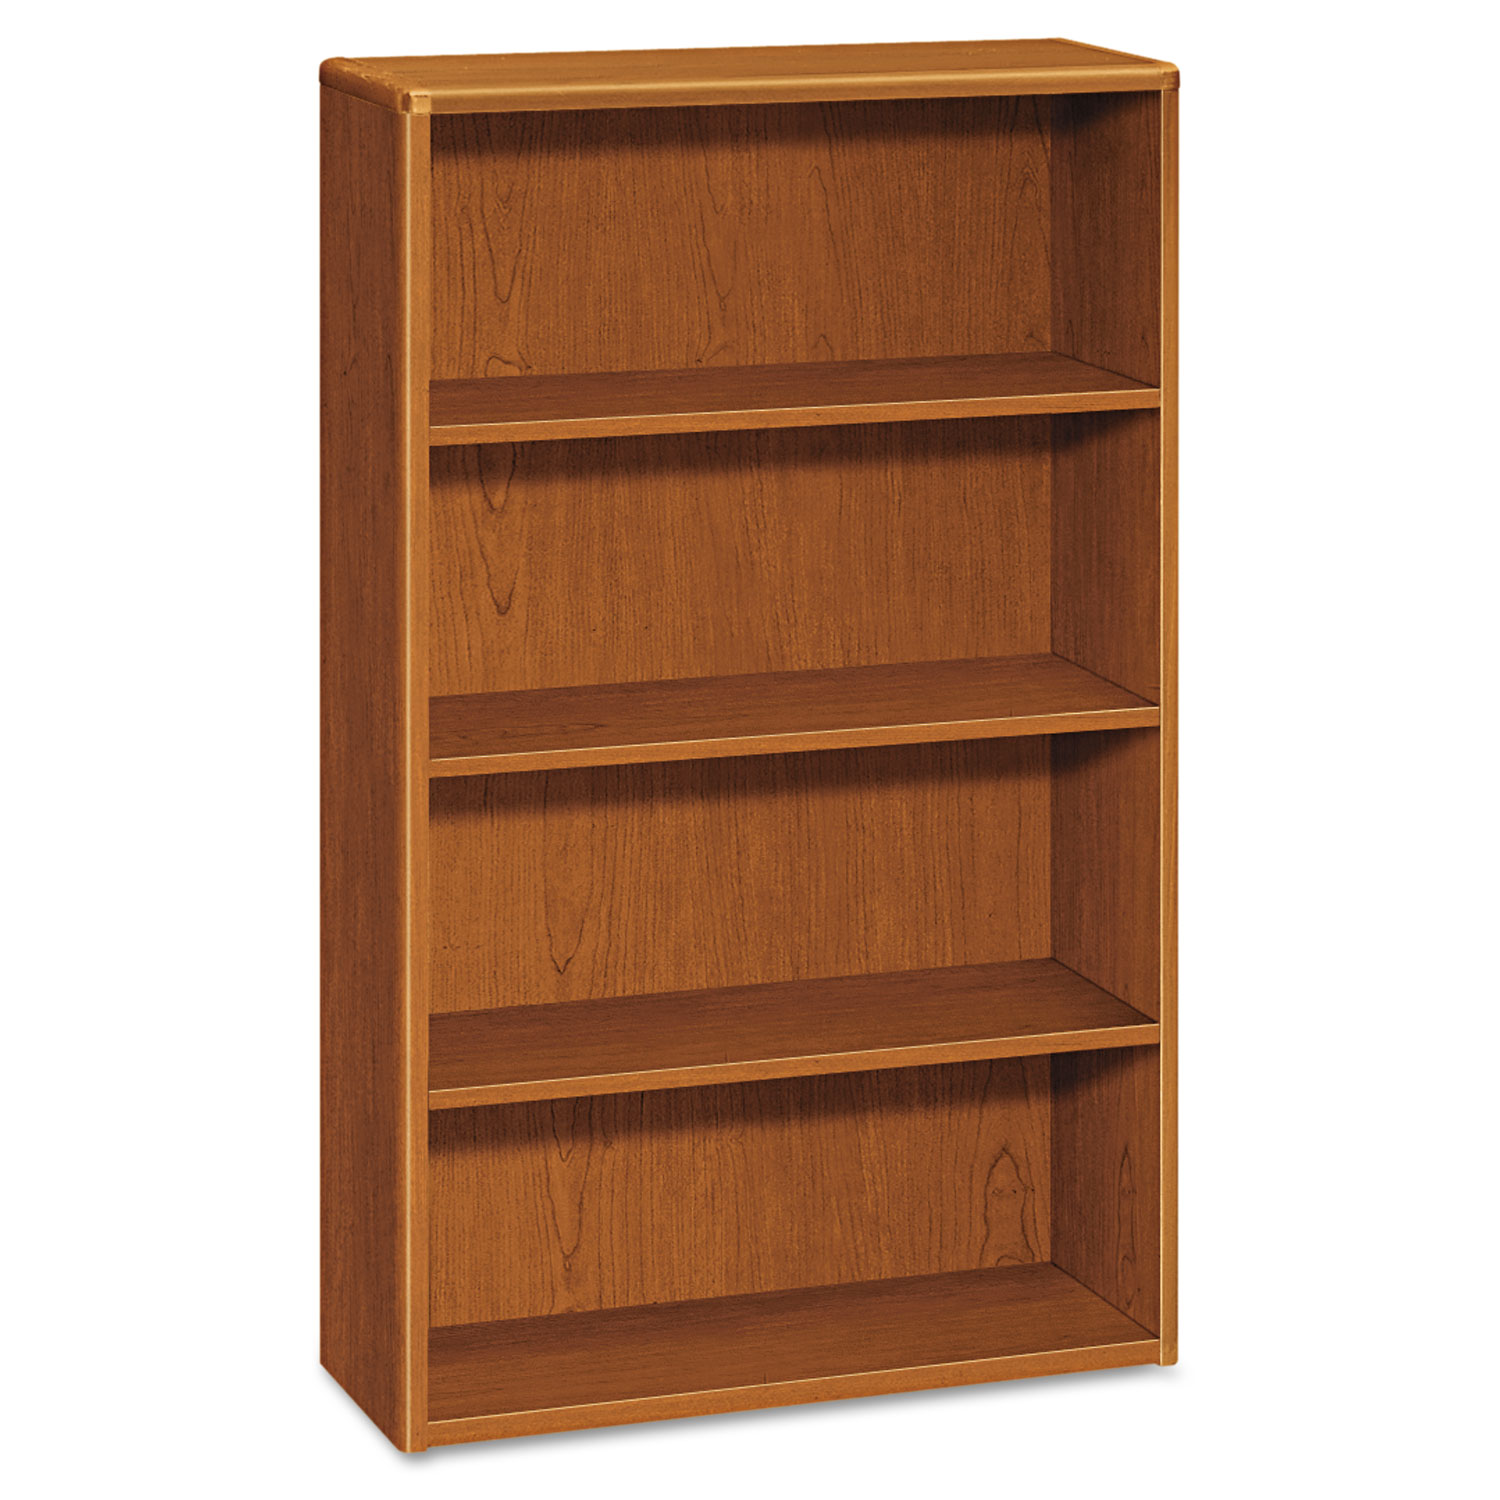 10700 Series Wood Bookcase, Four Shelf, 36w x 13 1/8d x 57 1/8h, Bourbon Cherry